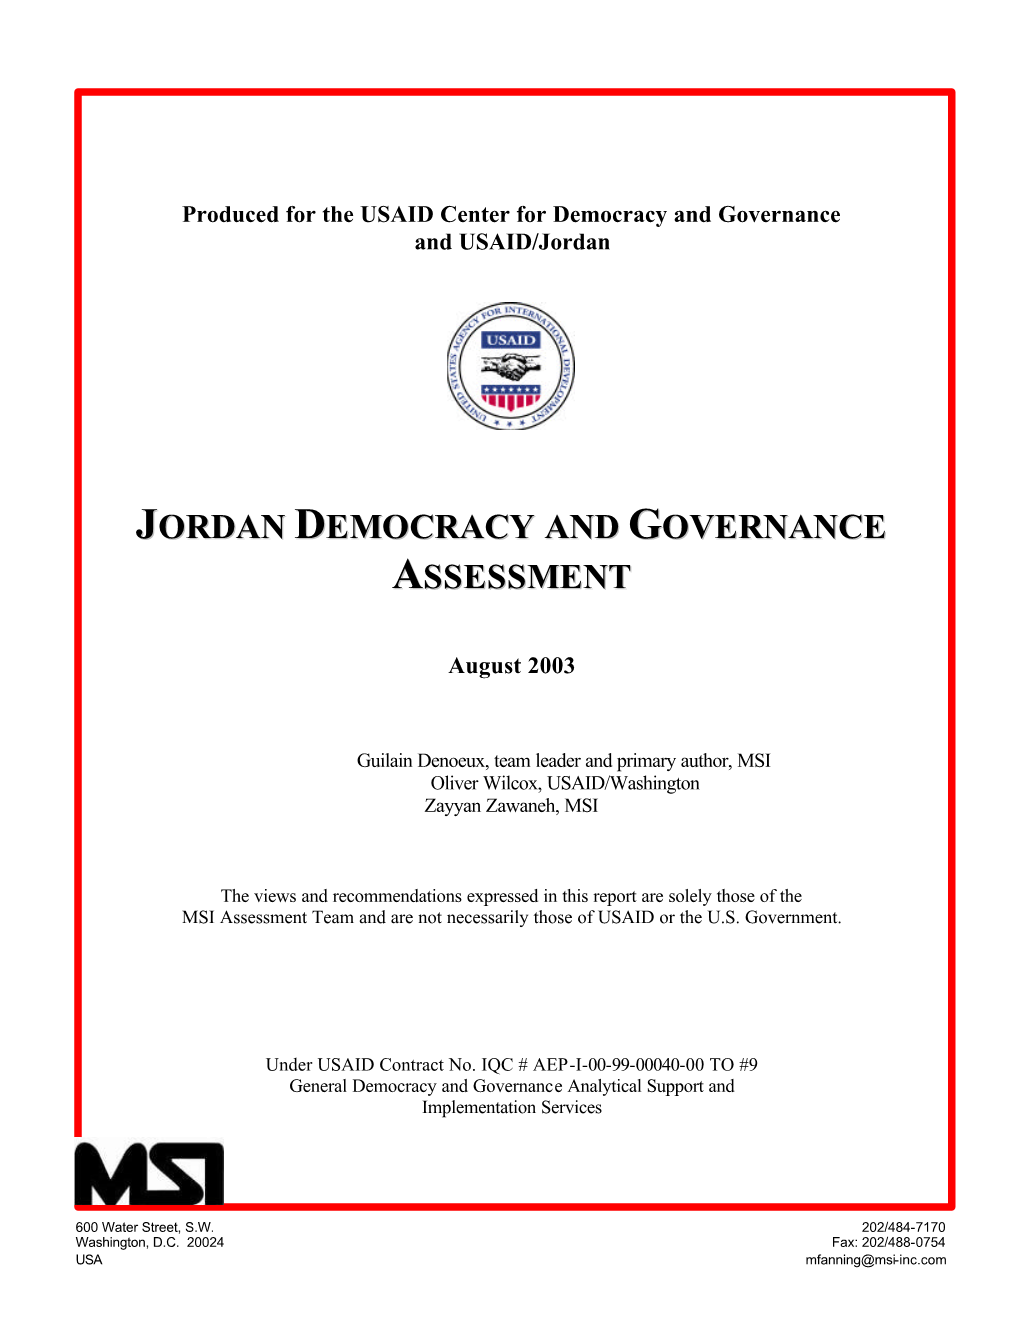 Jordan Democracy and Governance Assessment